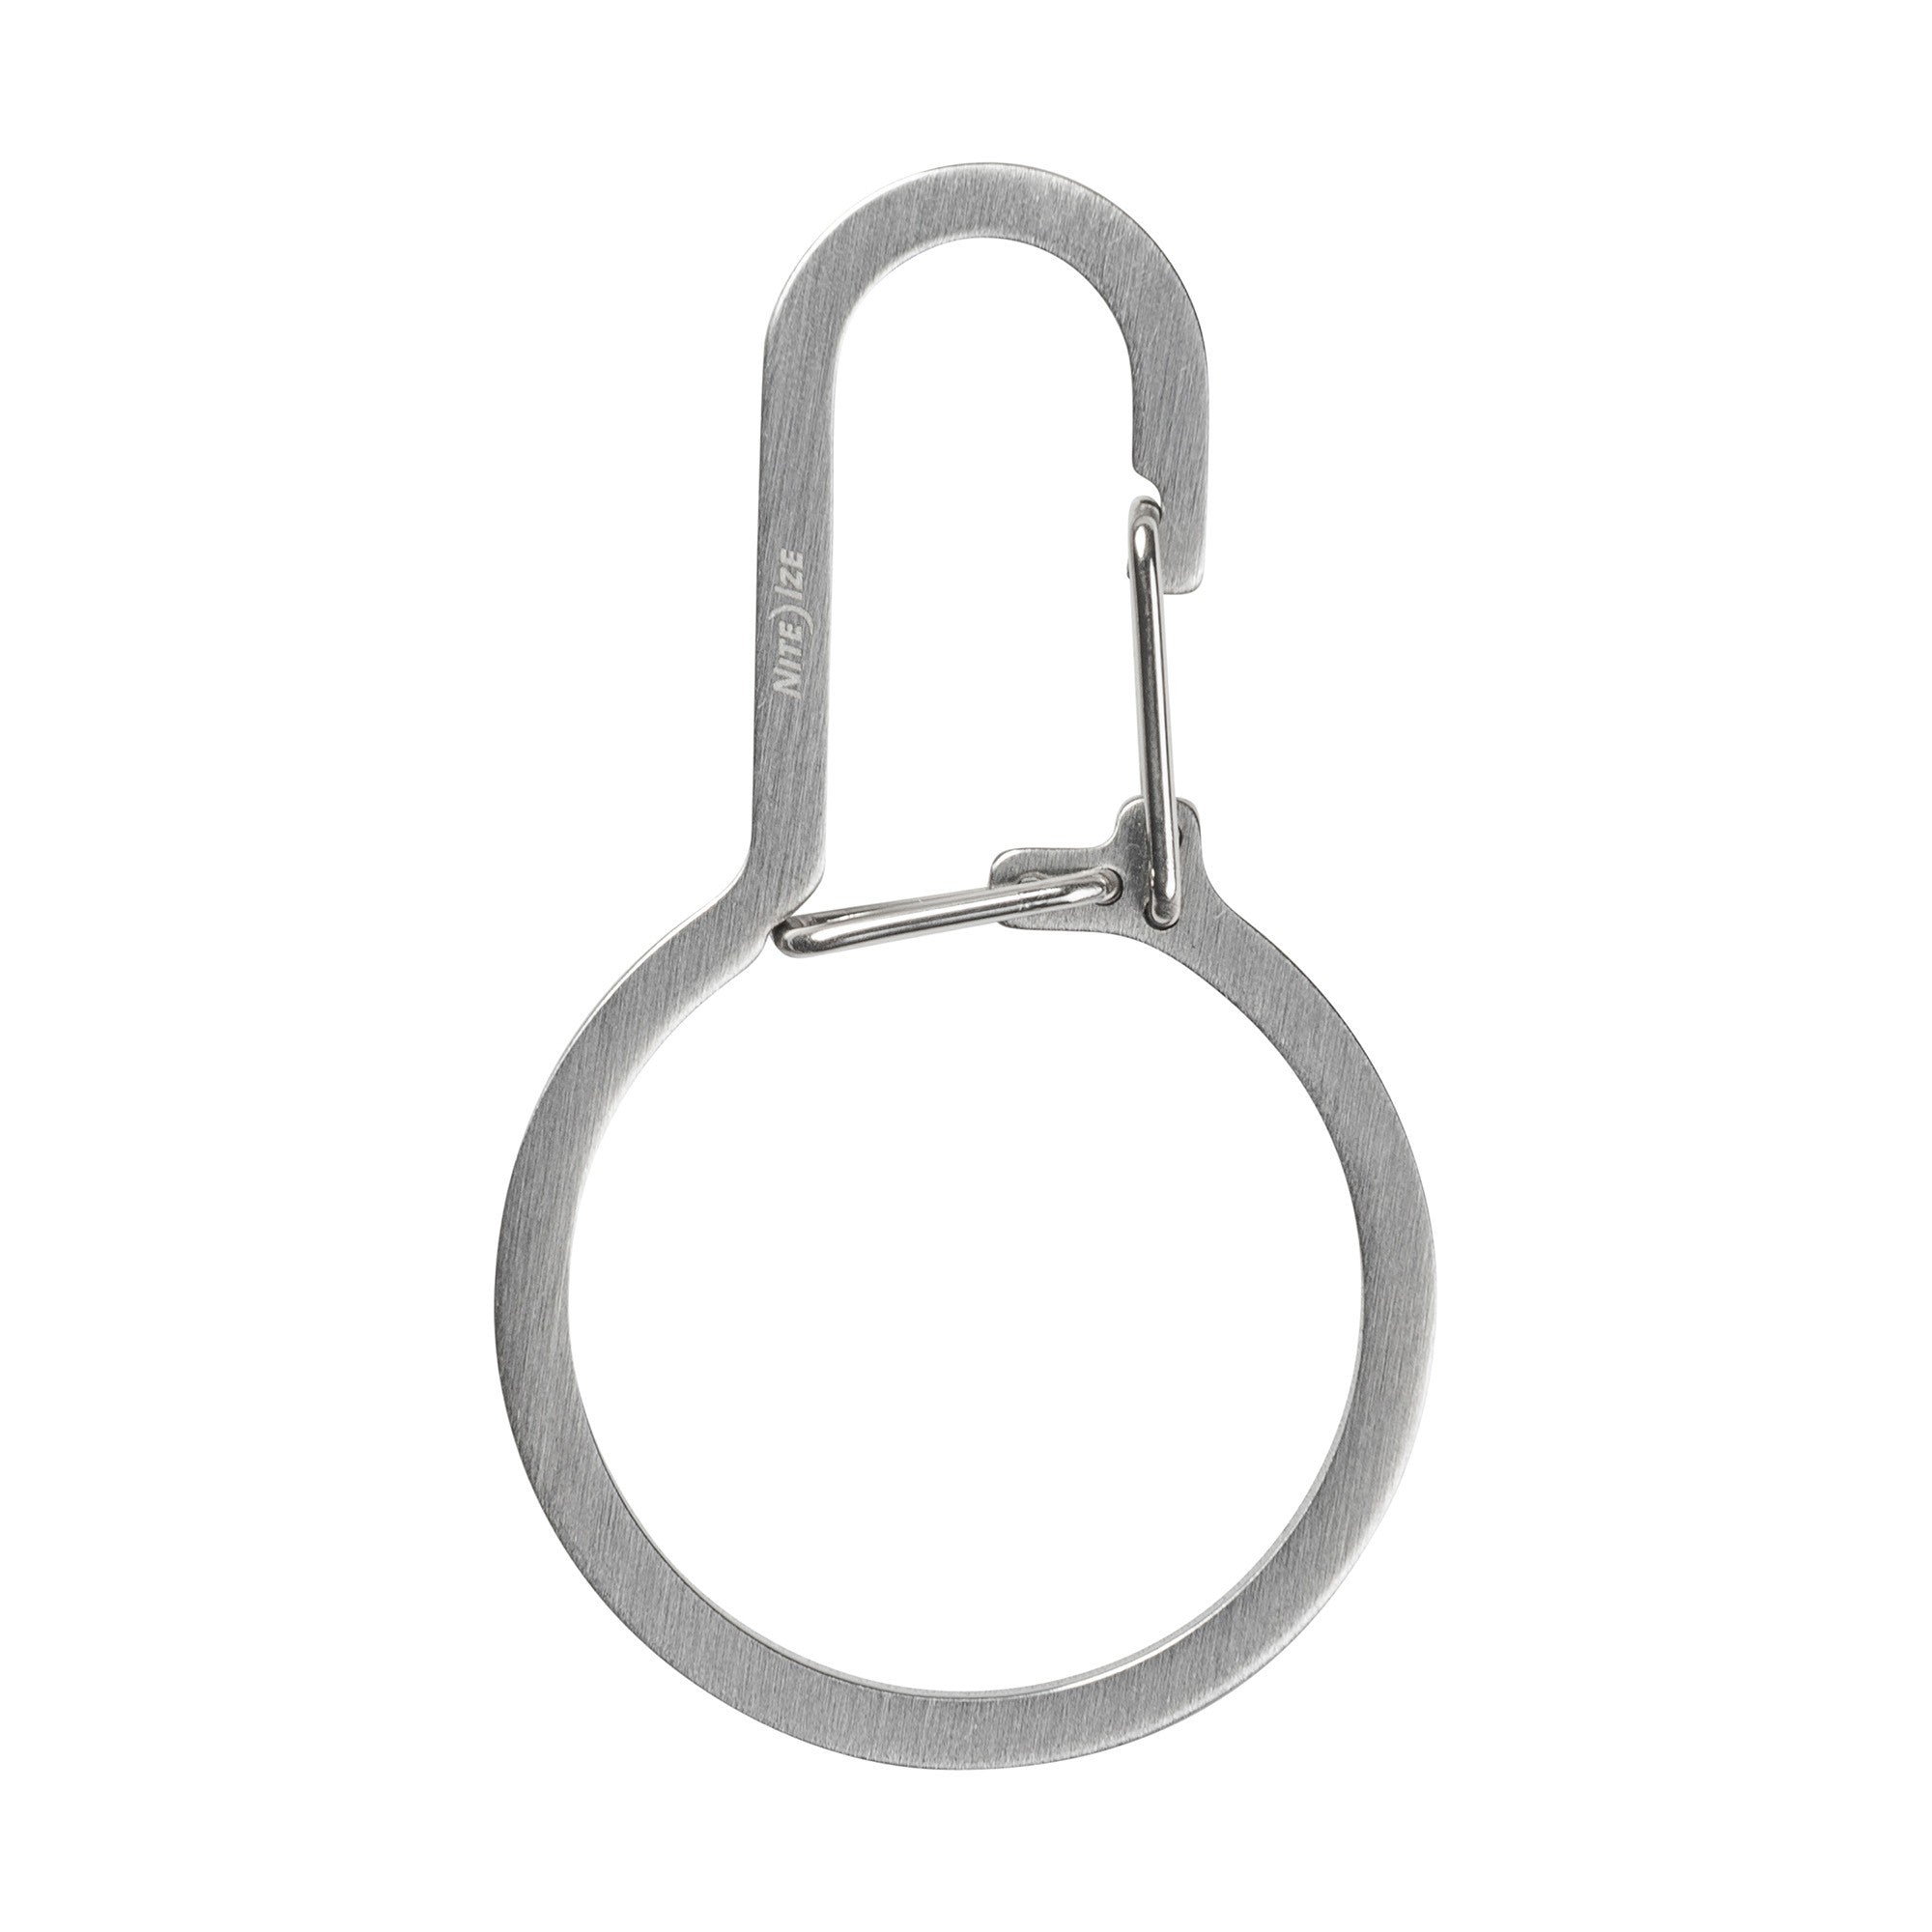 Nite Ize DualPass Dual Chamber Key Ring - 15-11178